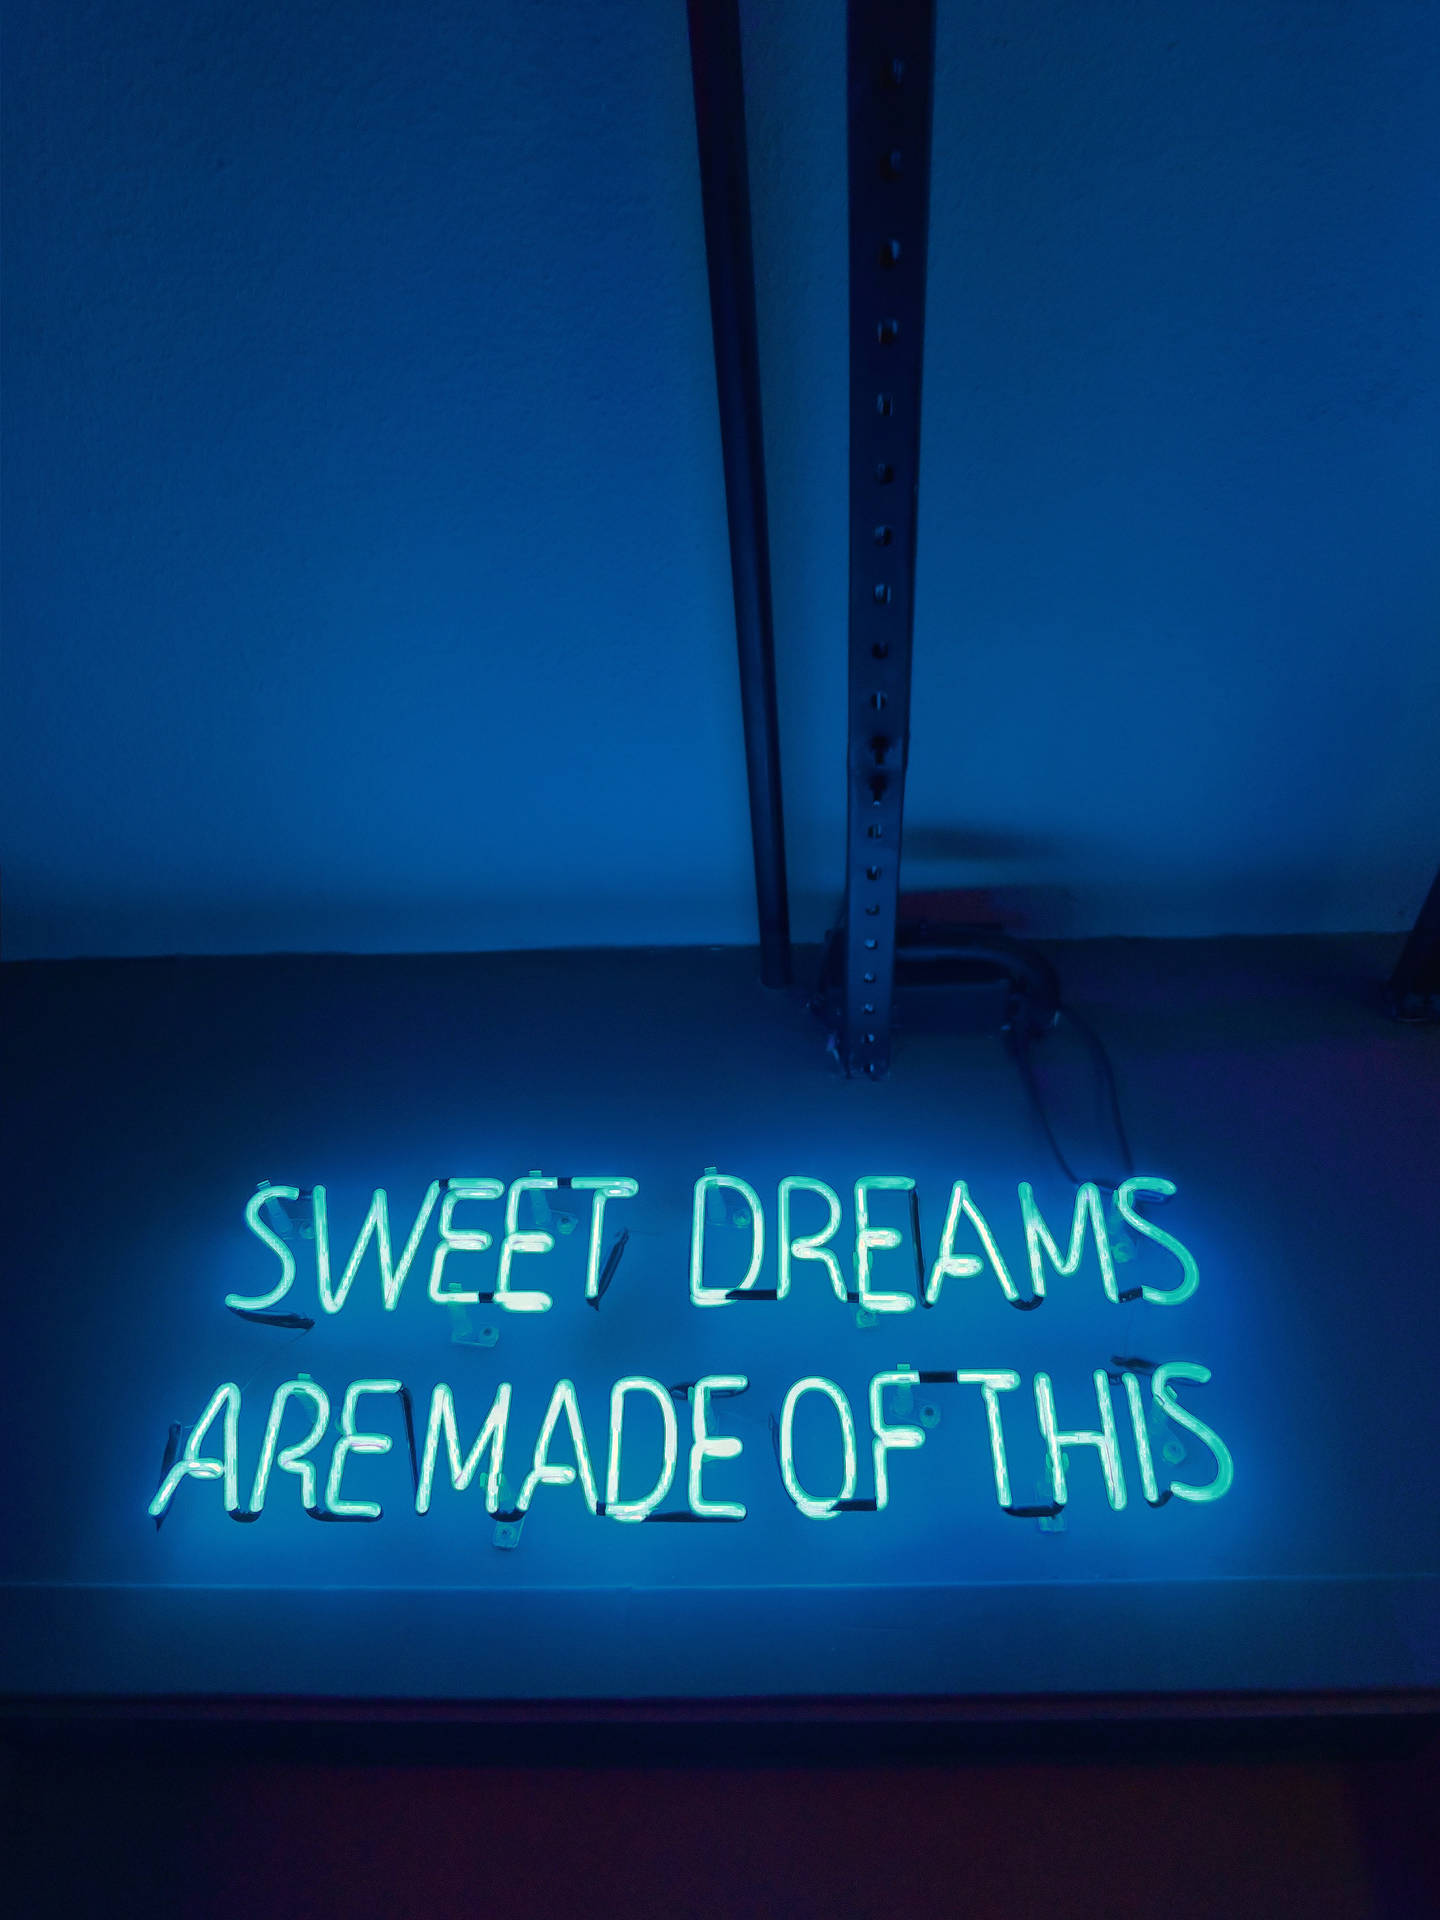 Süßeträume Neon-schild Wallpaper